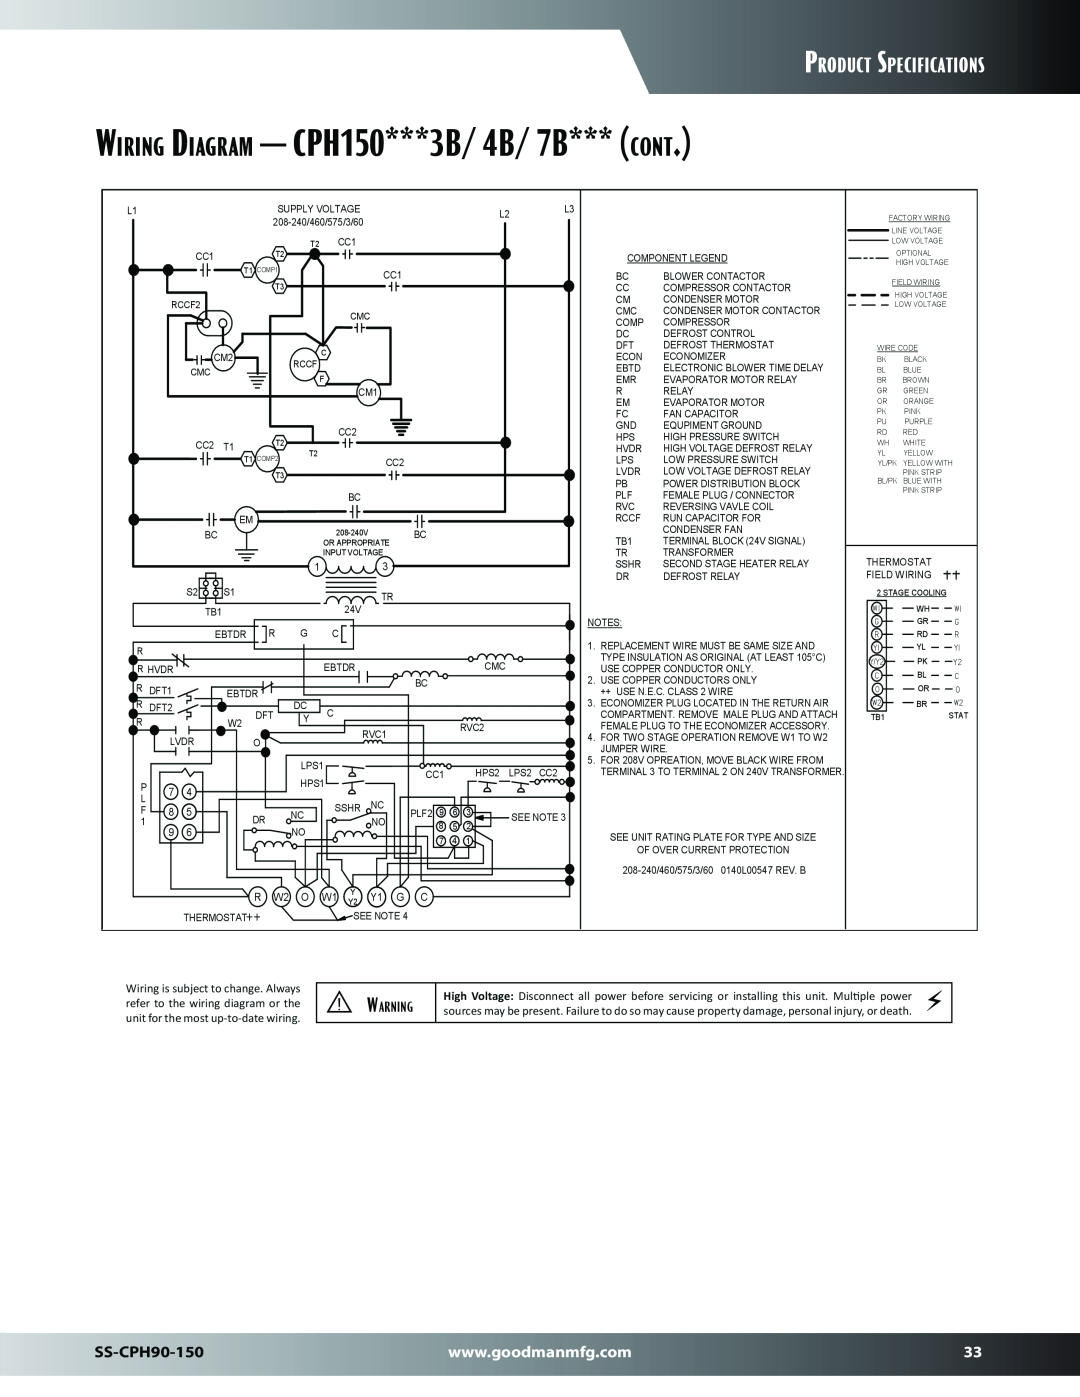 Goodman Mfg SS-CPH90-150 dimensions Wiring Diagram - CPH150***3B/ 4B/ 7B*** cont, Product Specifications 